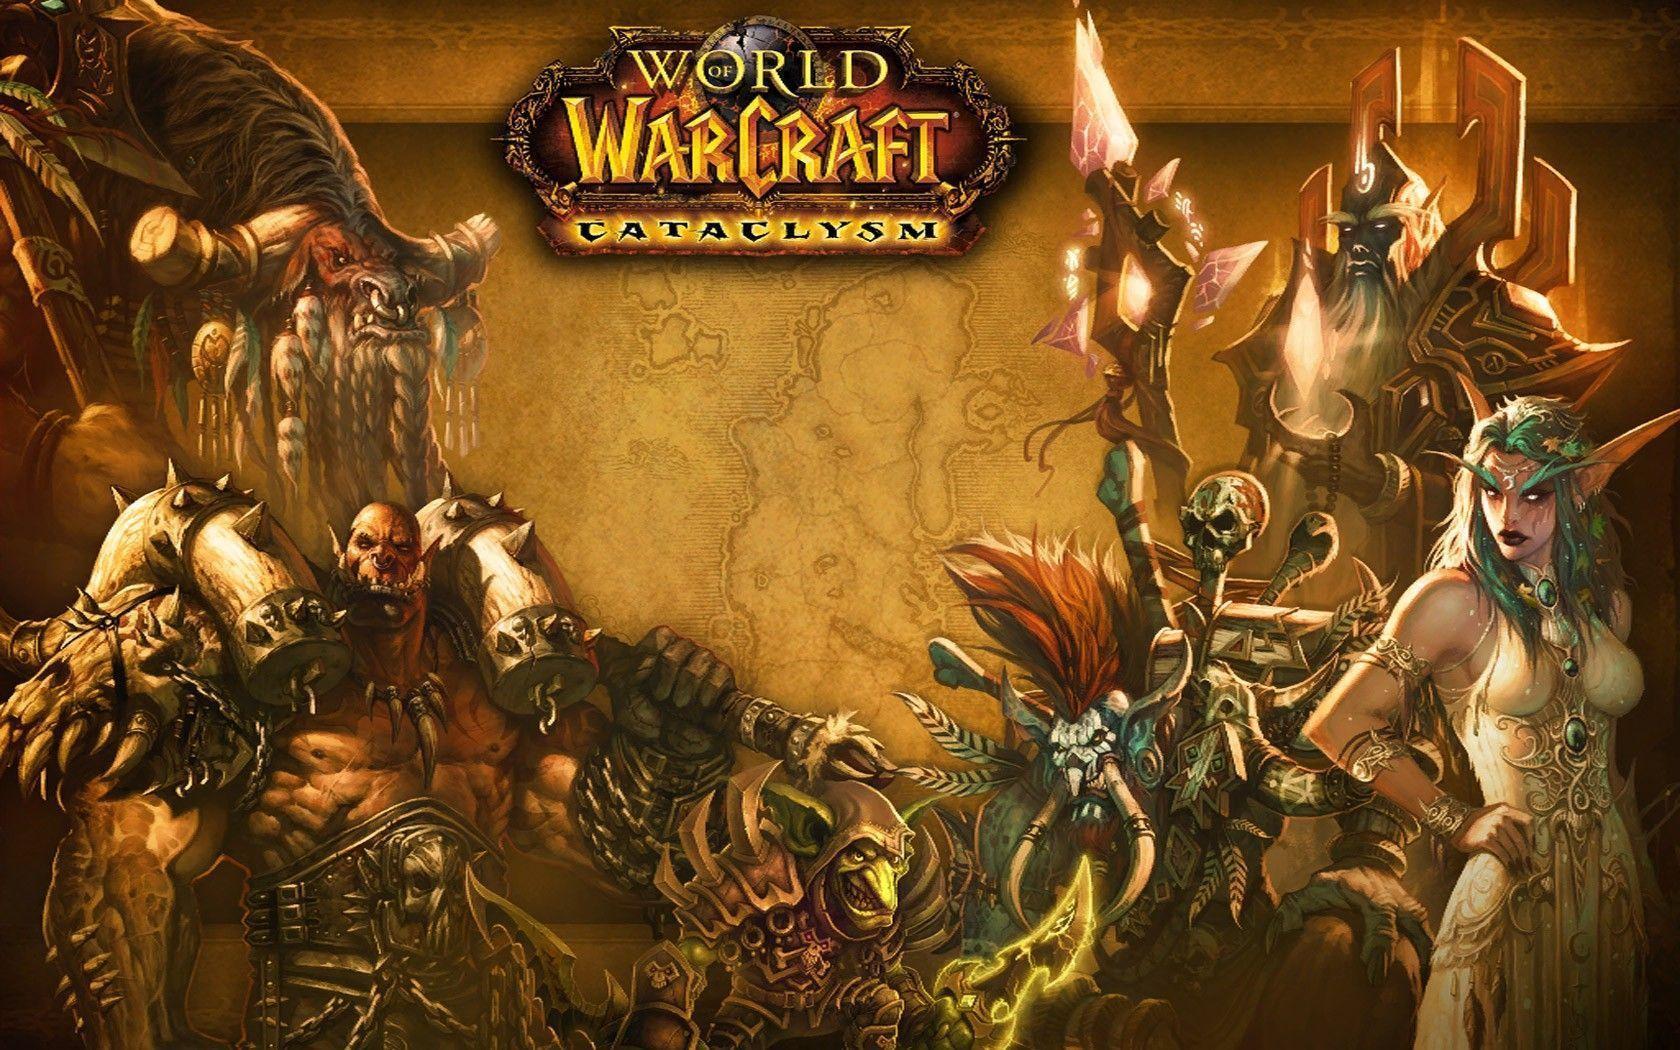 The Image of World Of Warcraft World Of Warcraft: Cataclysm